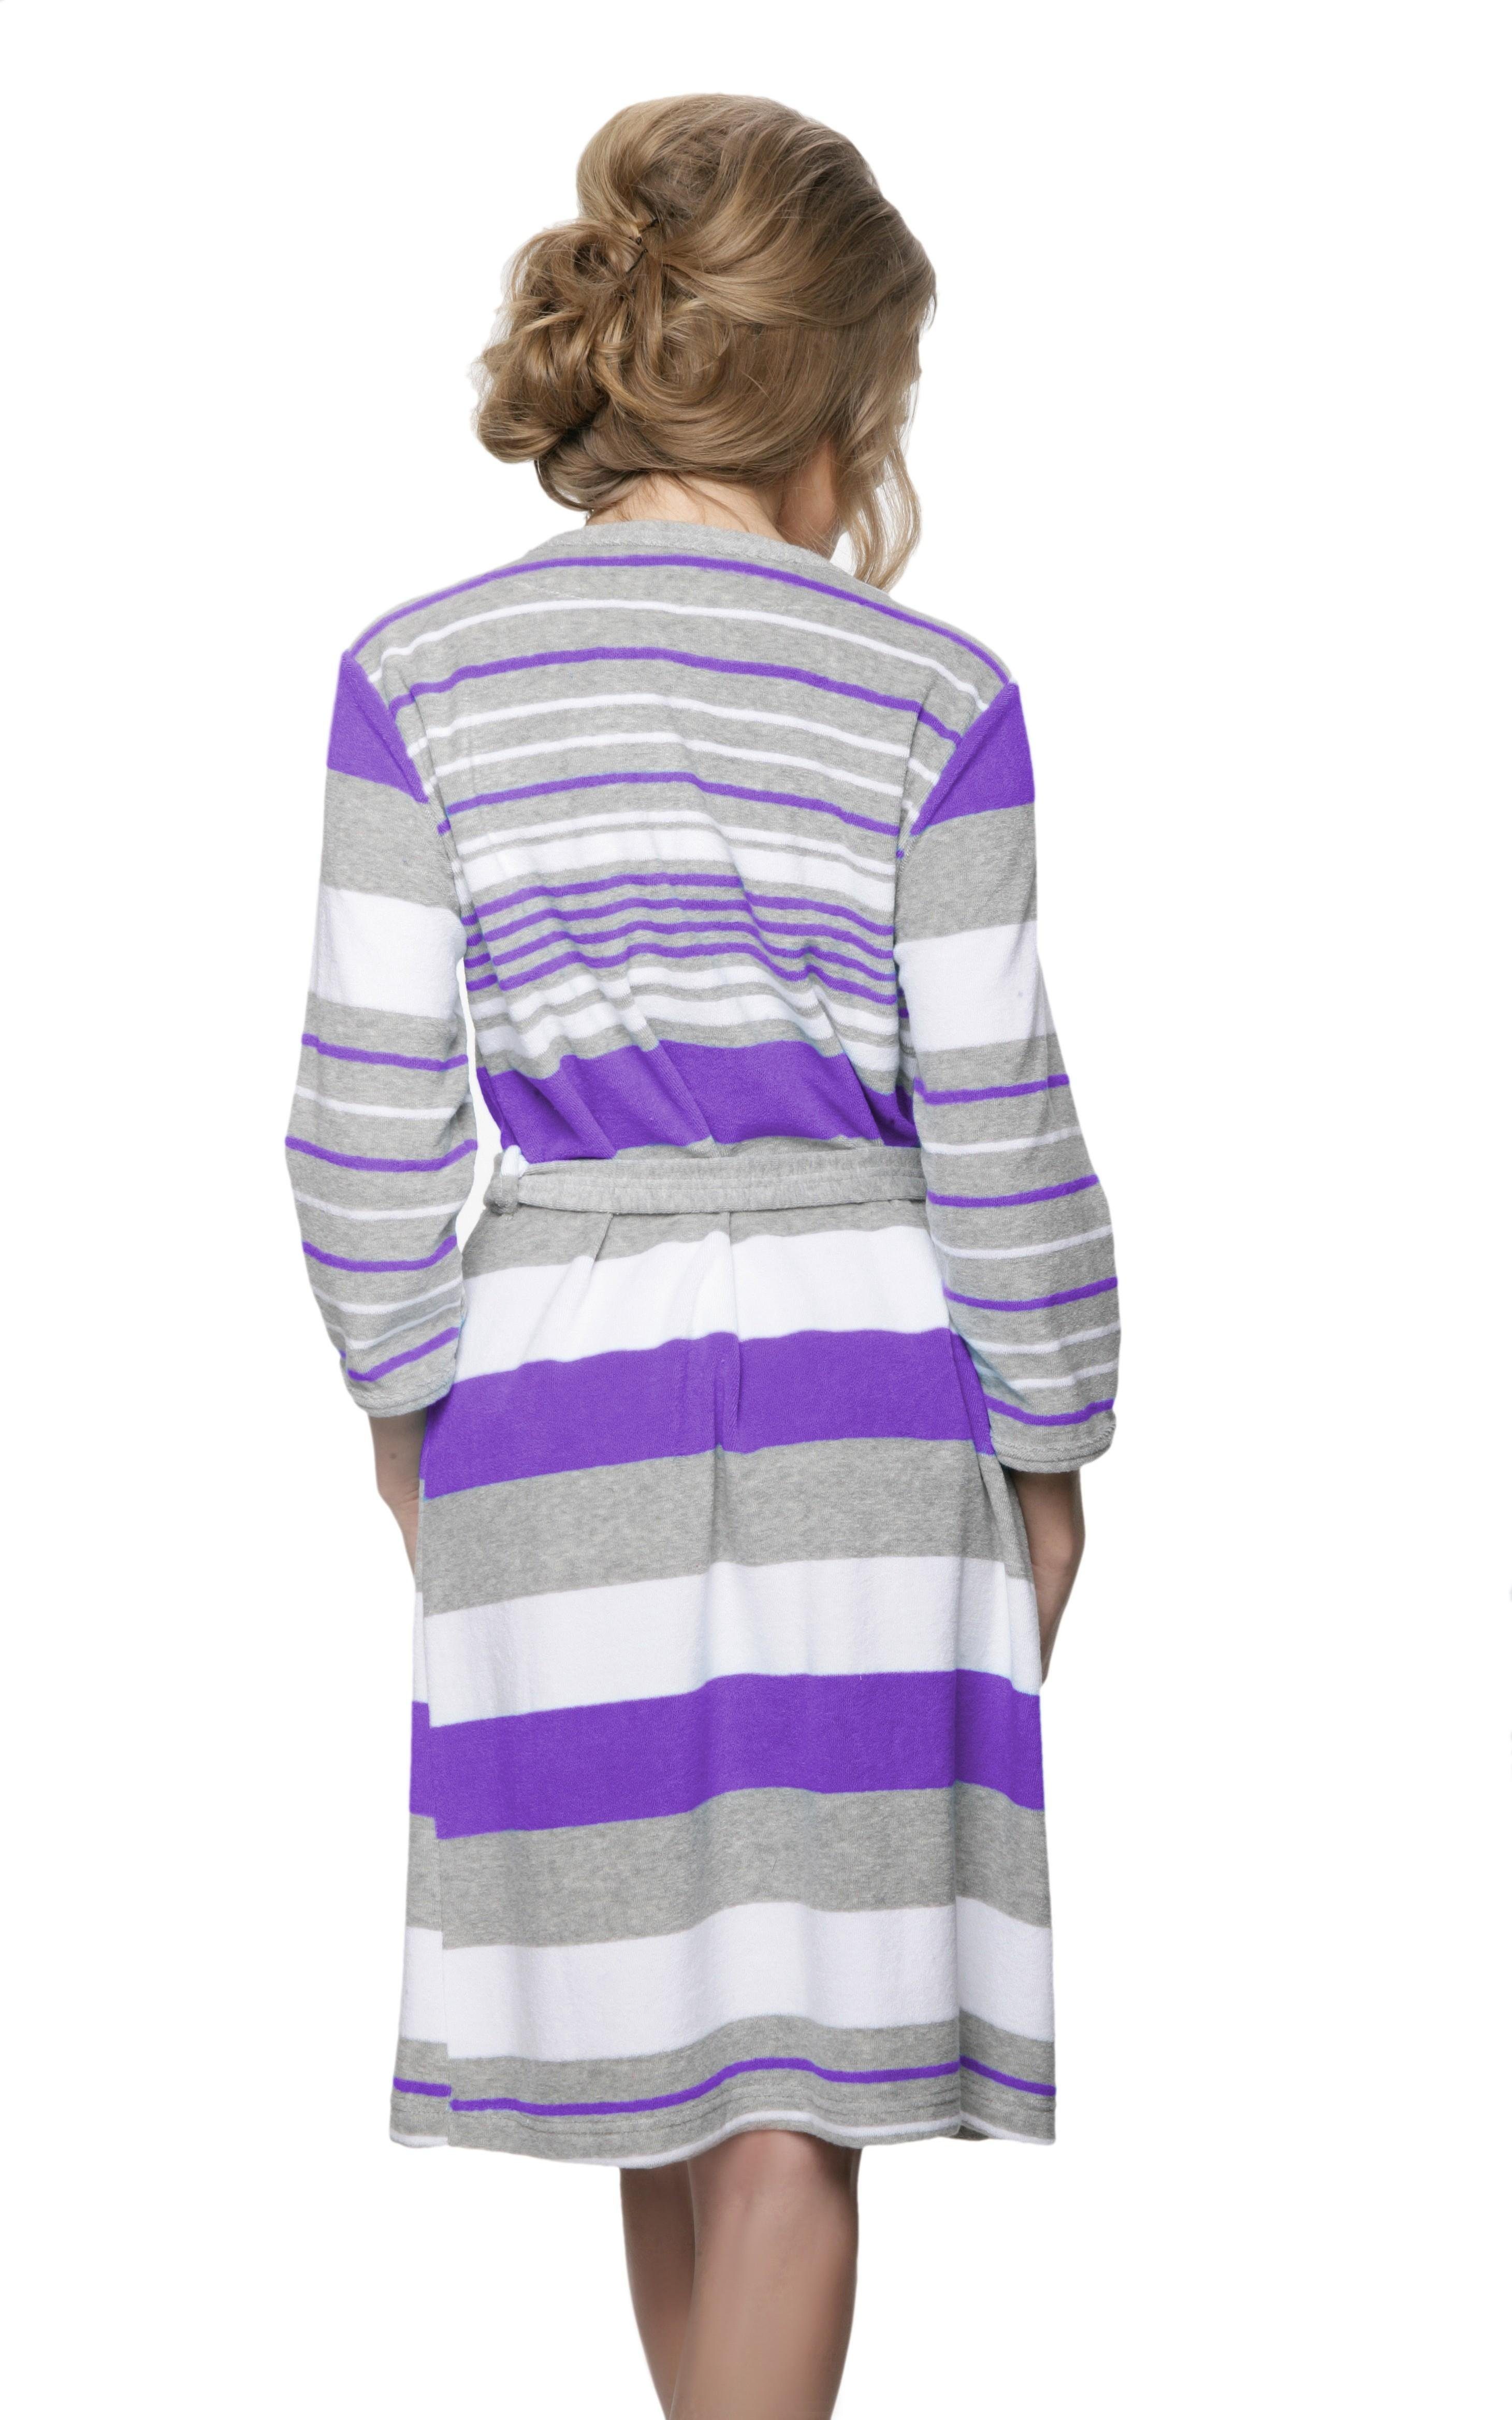 Kurz Aquarti Streifen Aquarti Reißverschluss mit Violett Damen Damenbademantel Morgenmantel